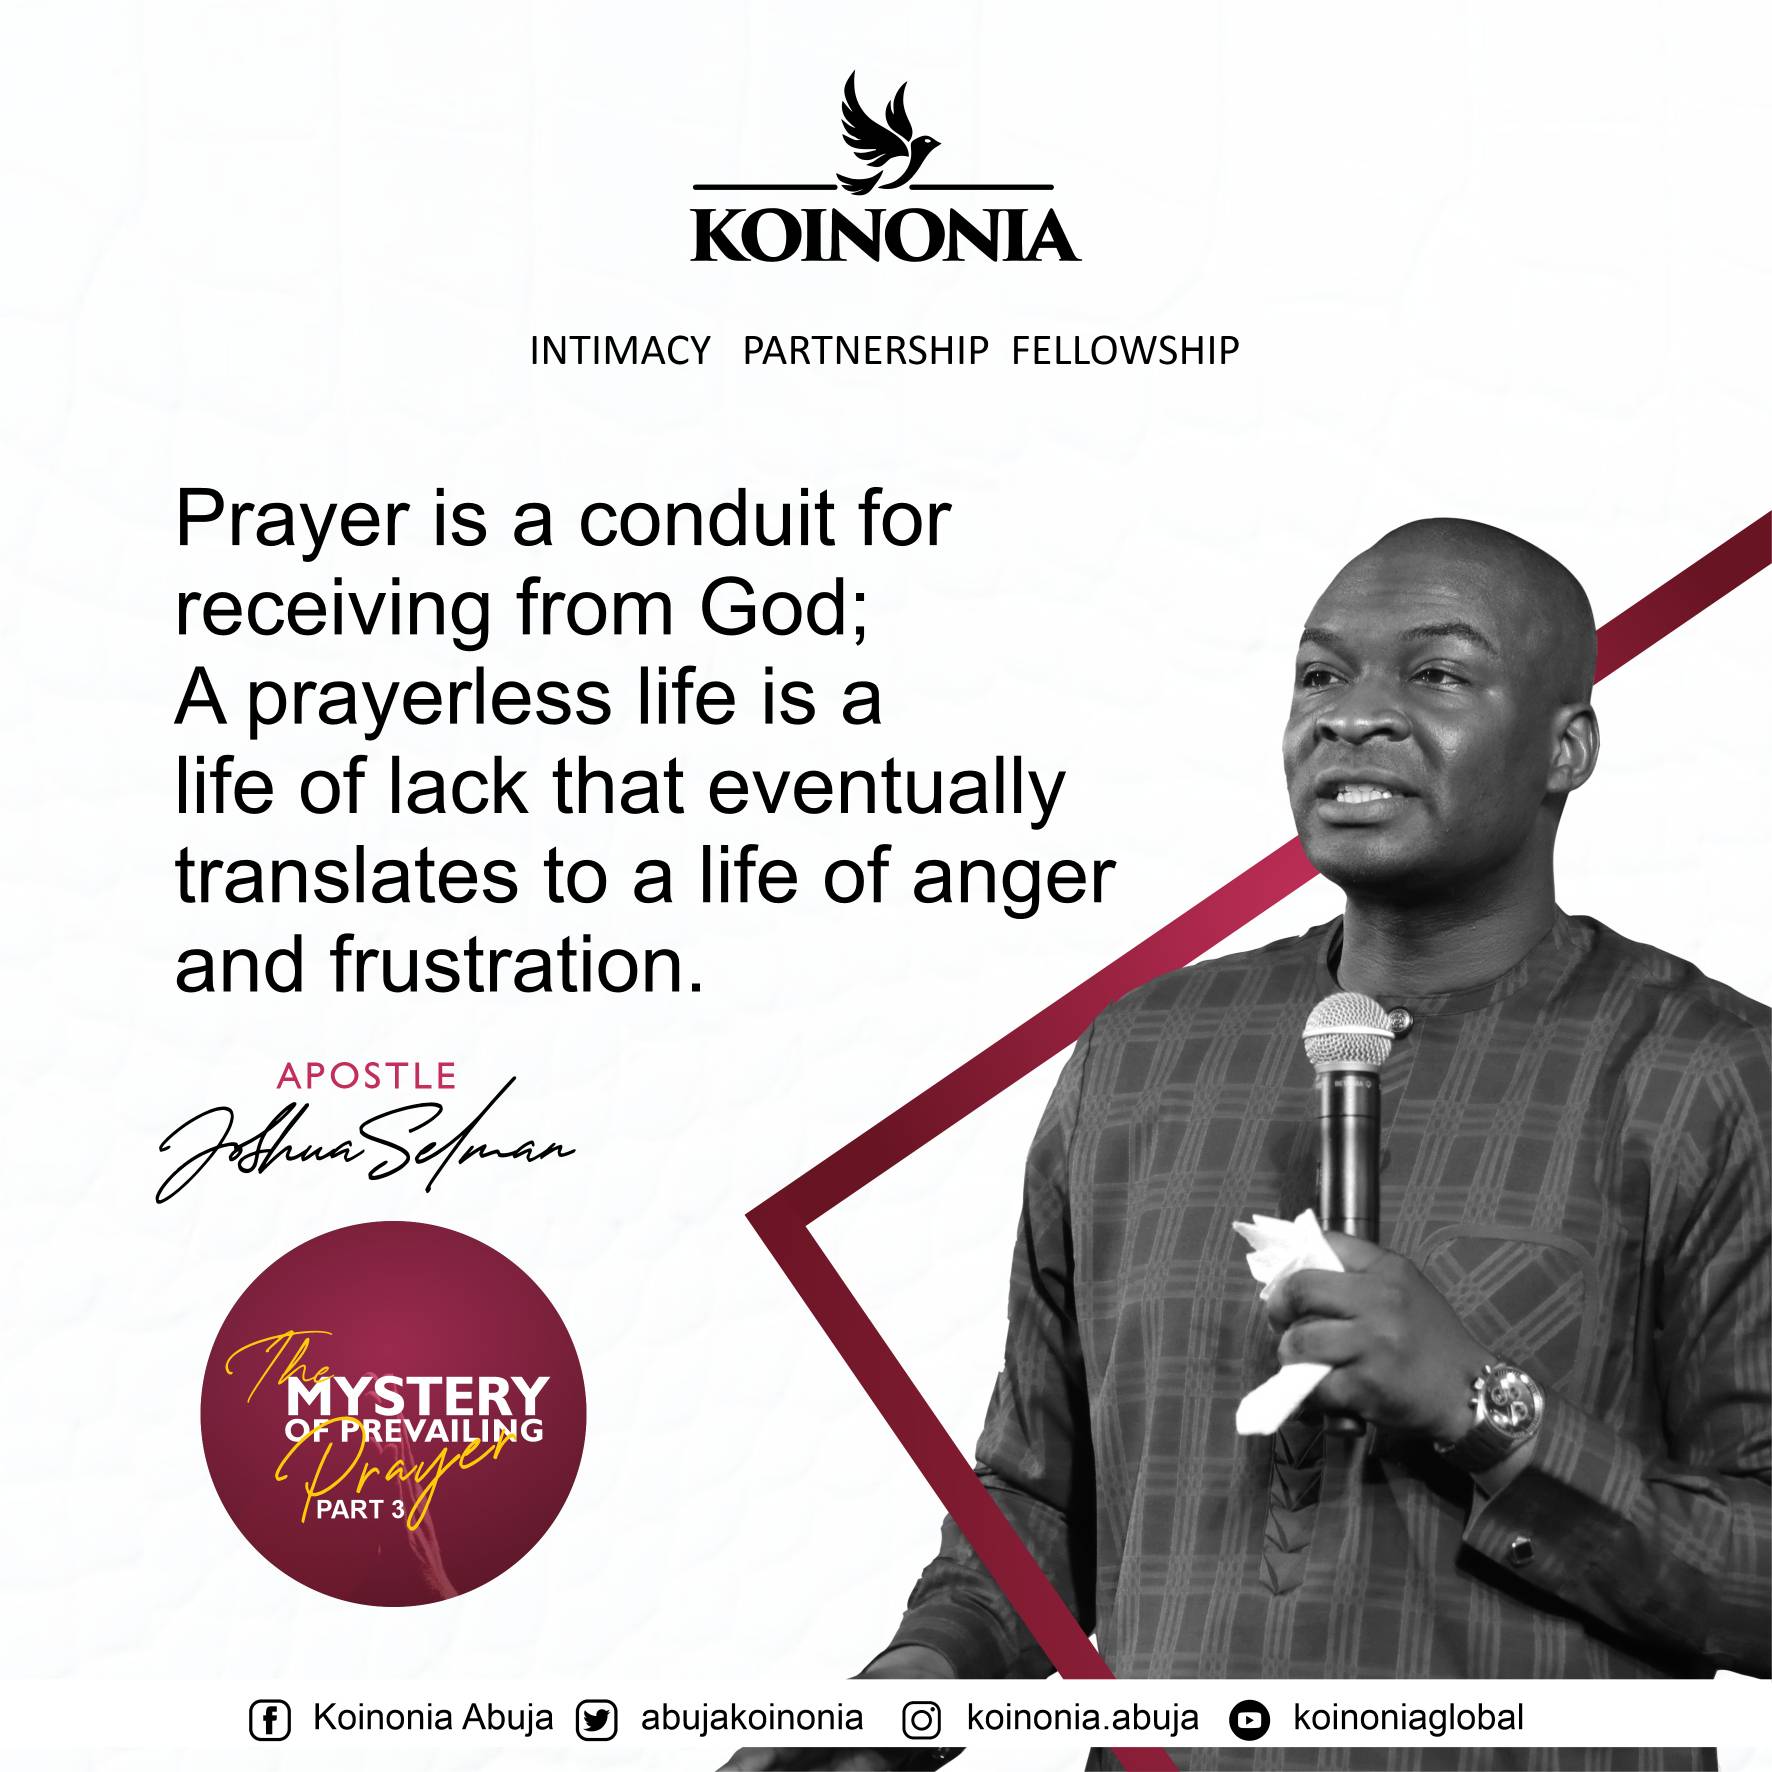 Download The Mystery of Prevailing Prayer Part Three Koinonia Abuja with Apostle Joshua Selman